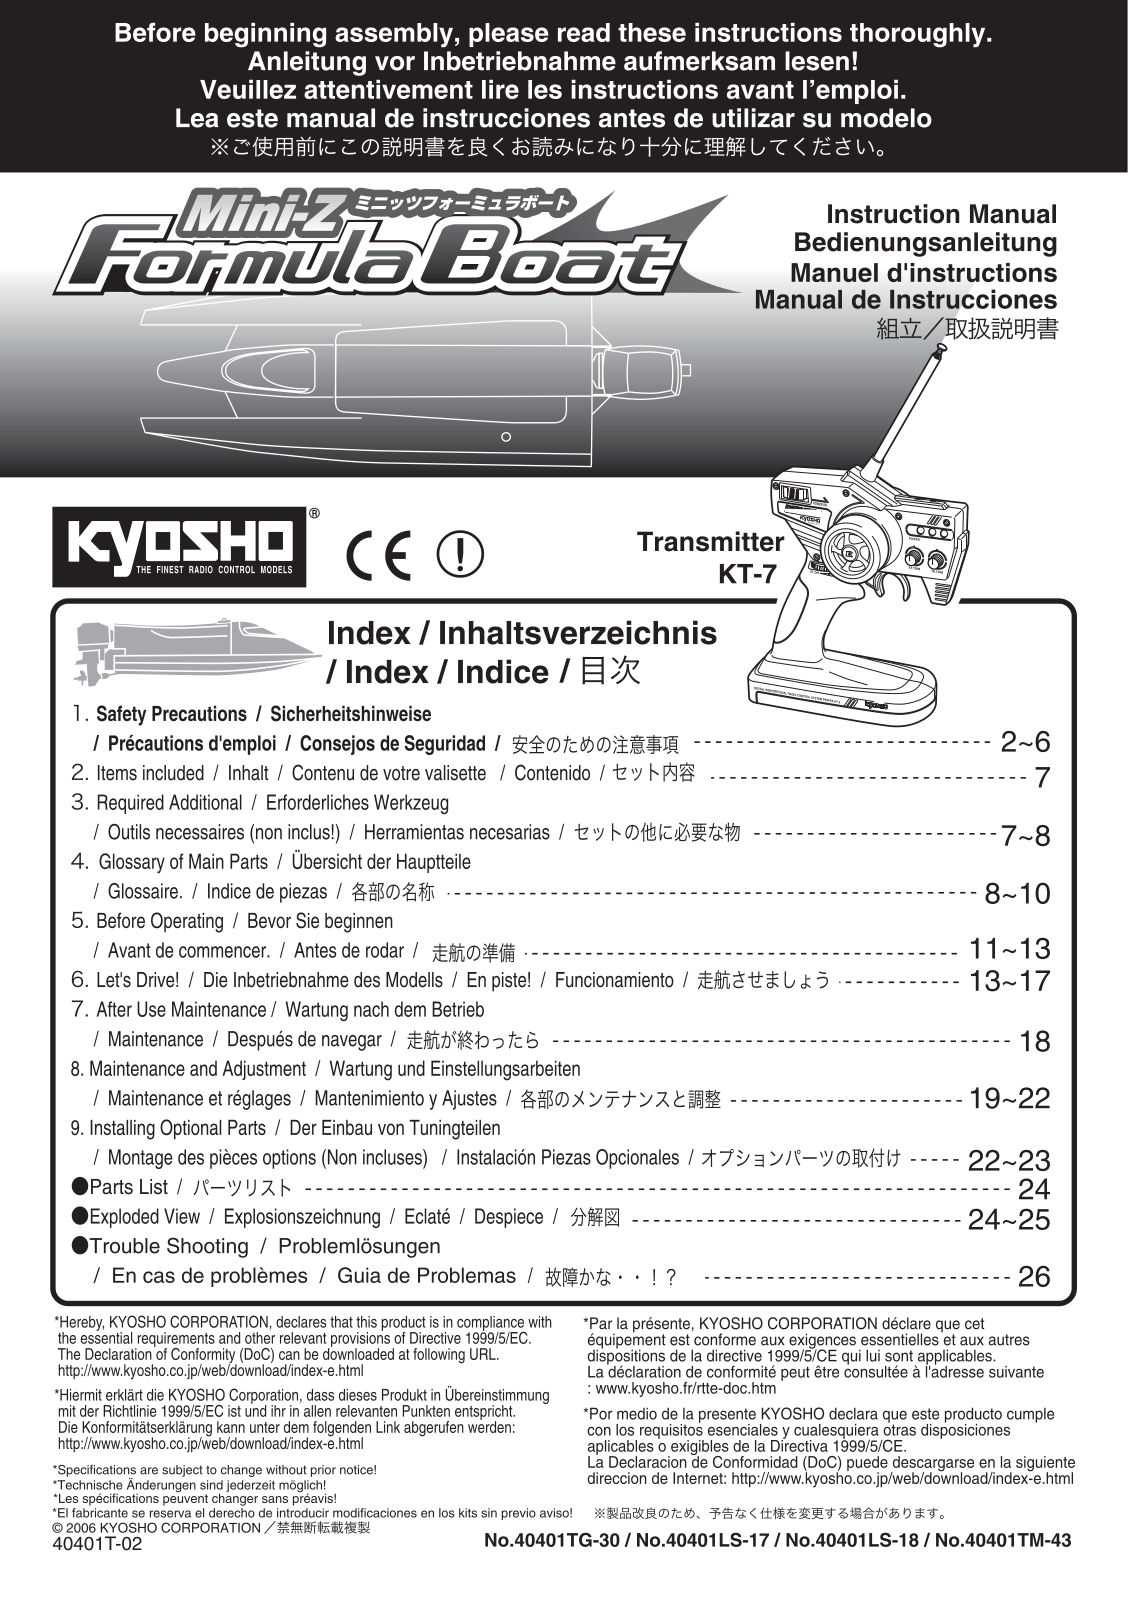 Kyosho MINI-Z FORMULA BOAT Manual